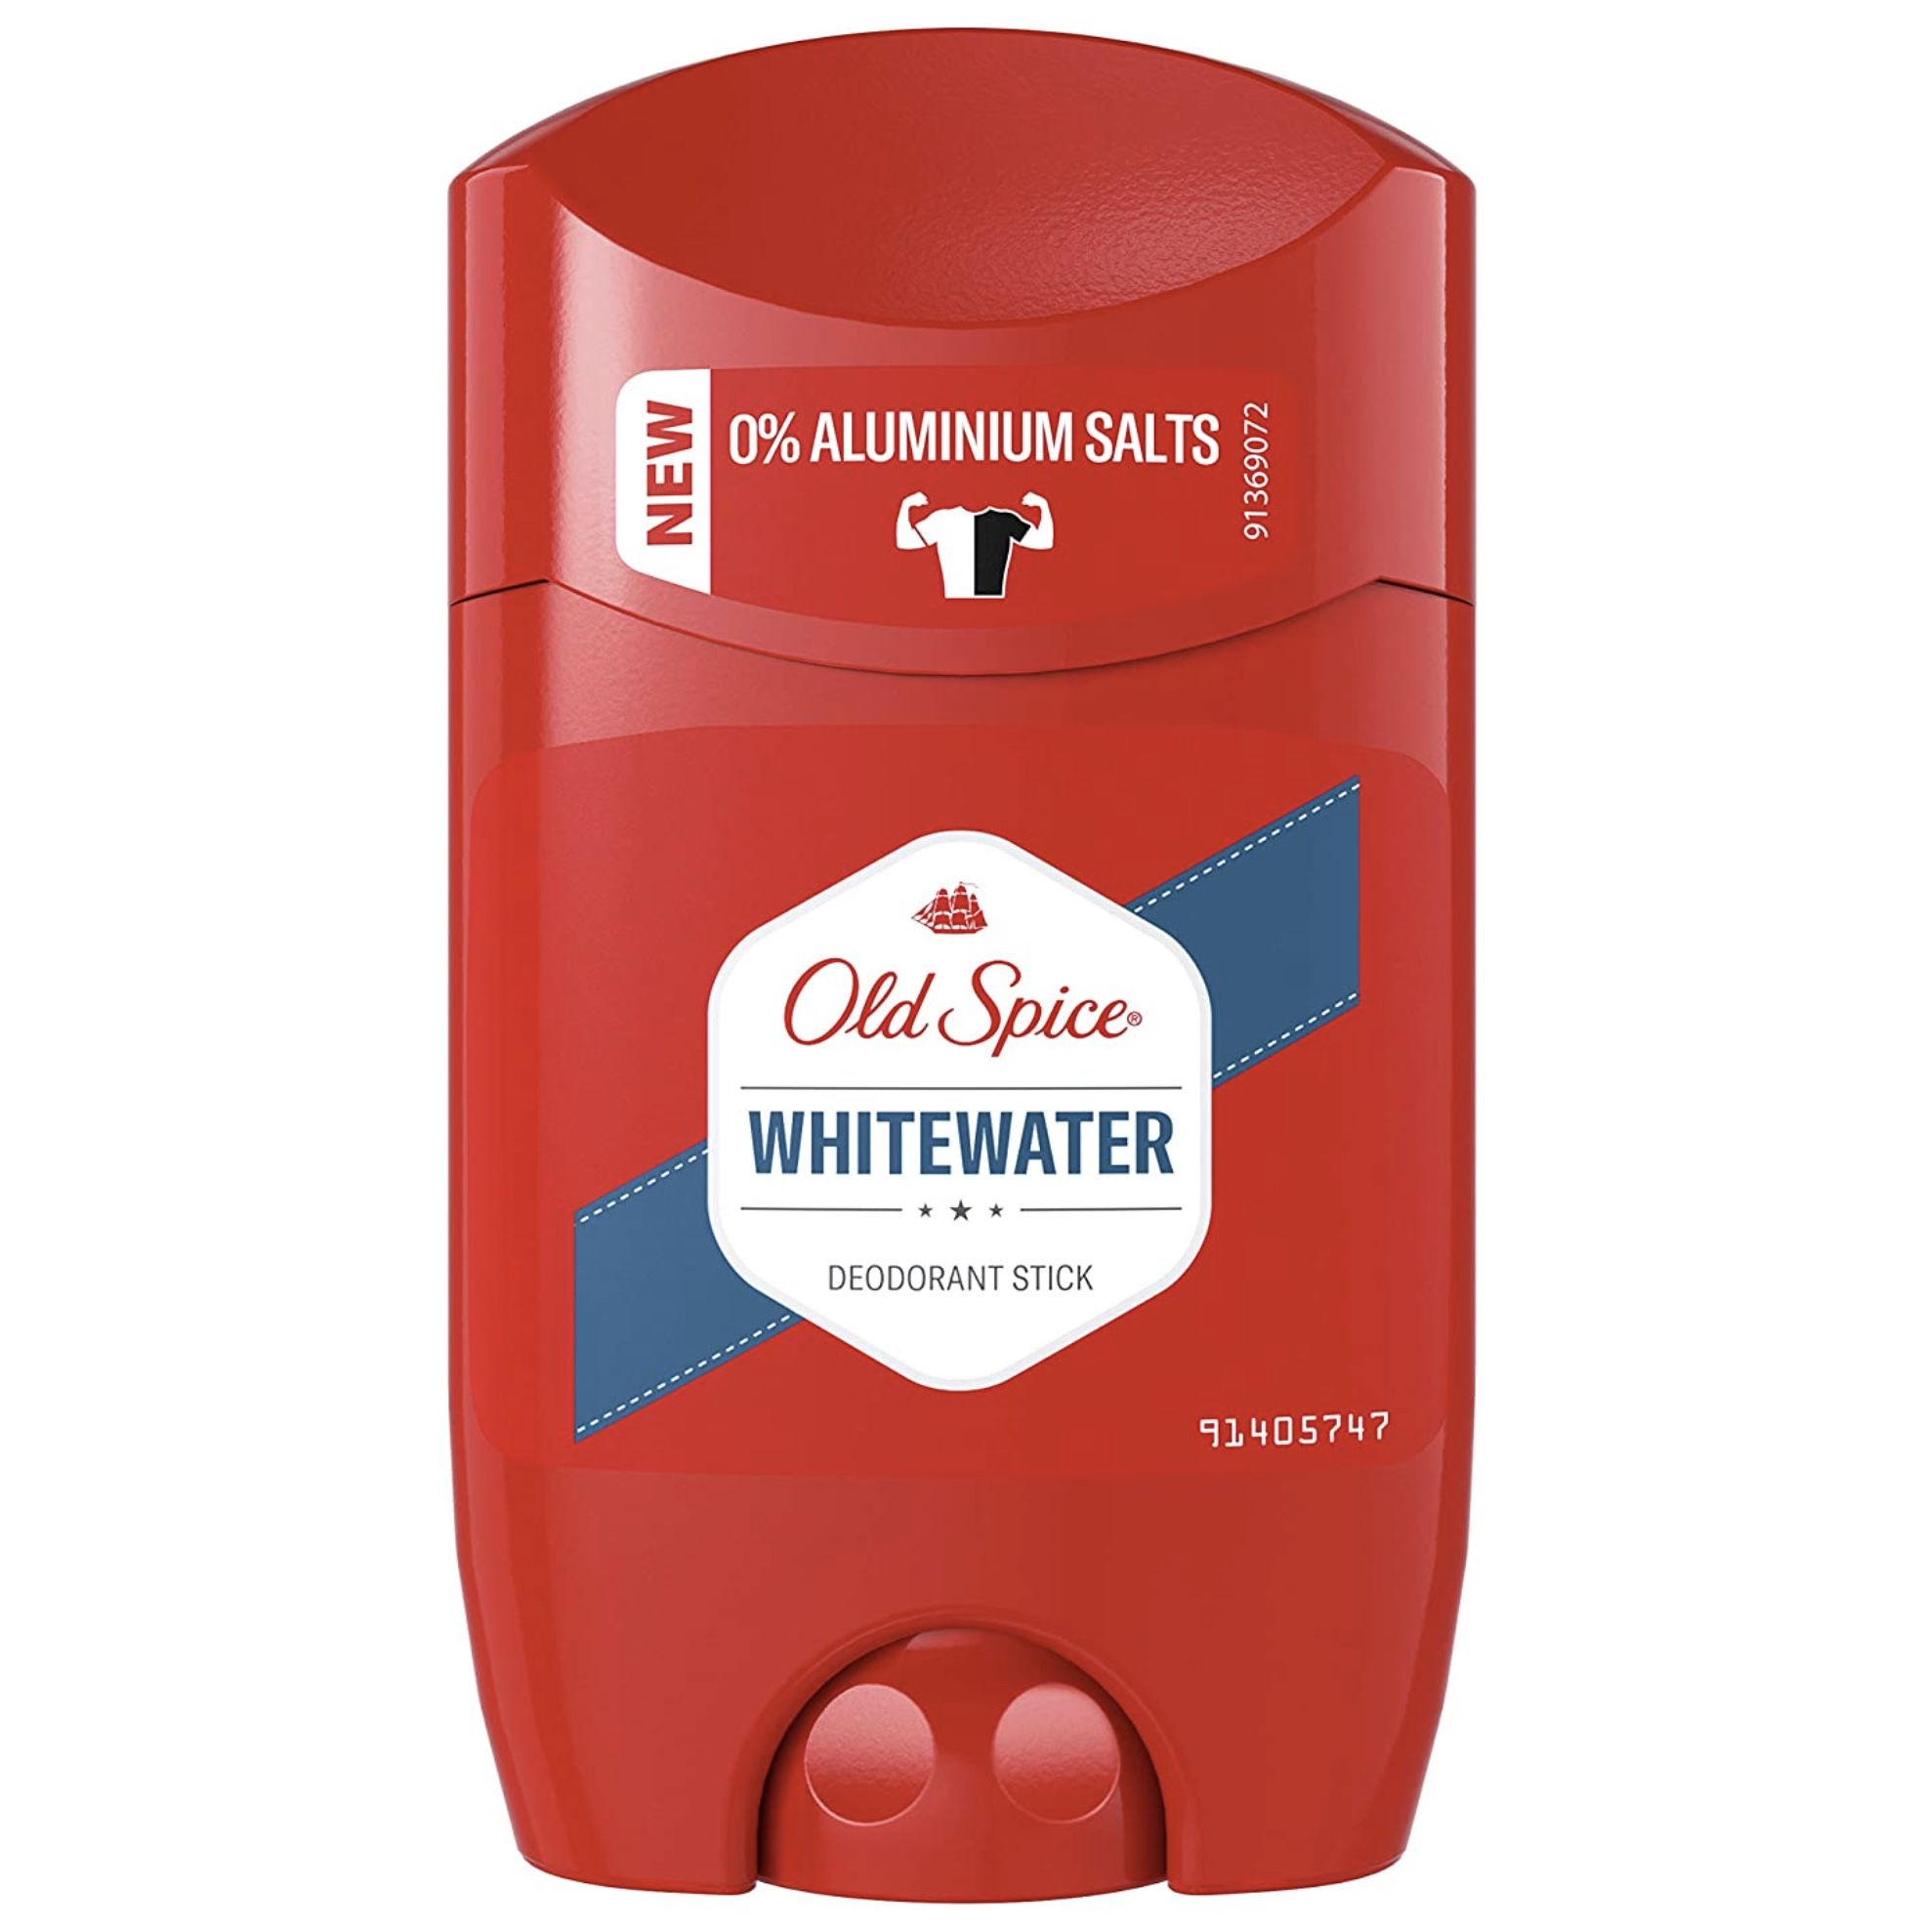 Old Spice Whitewater Deodorant Stick ohne Aluminium ab 1,43€ (statt 2,45€)   Prime Sparabo